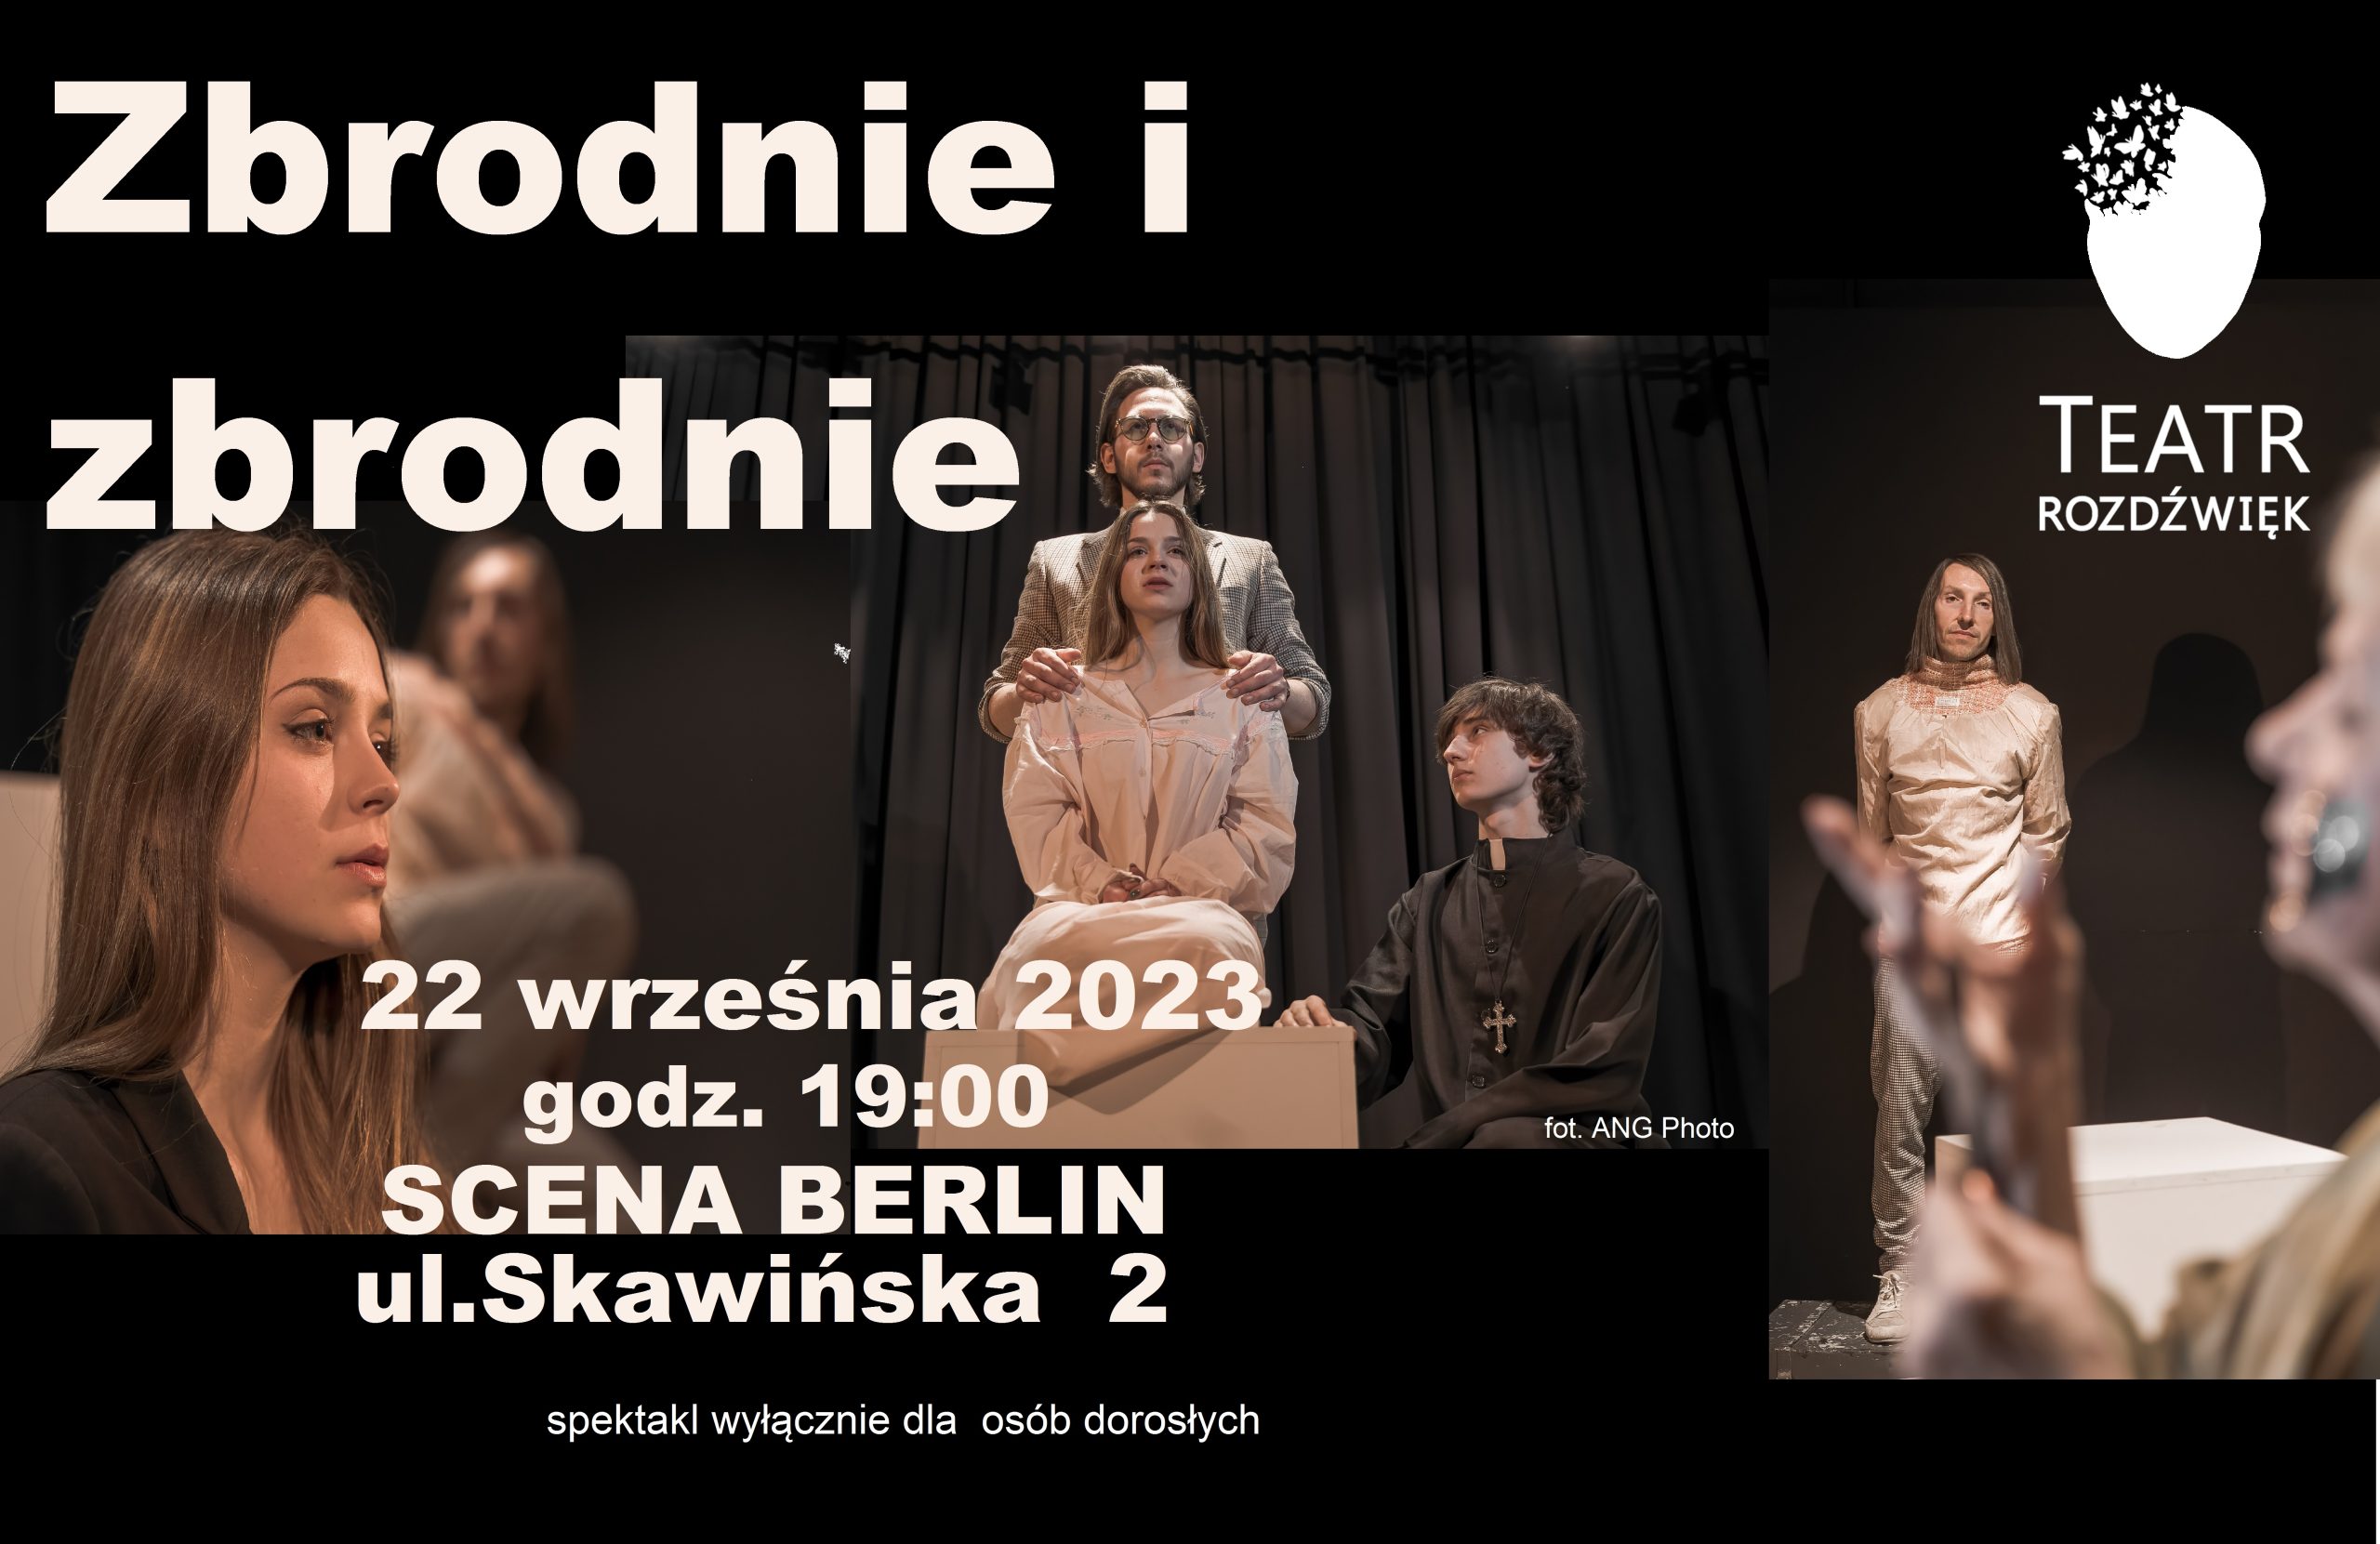 nytfg 1 scaled - "Zbrodnie i zbrodnie" Teatr Rozdźwięk na Scenie Berlin